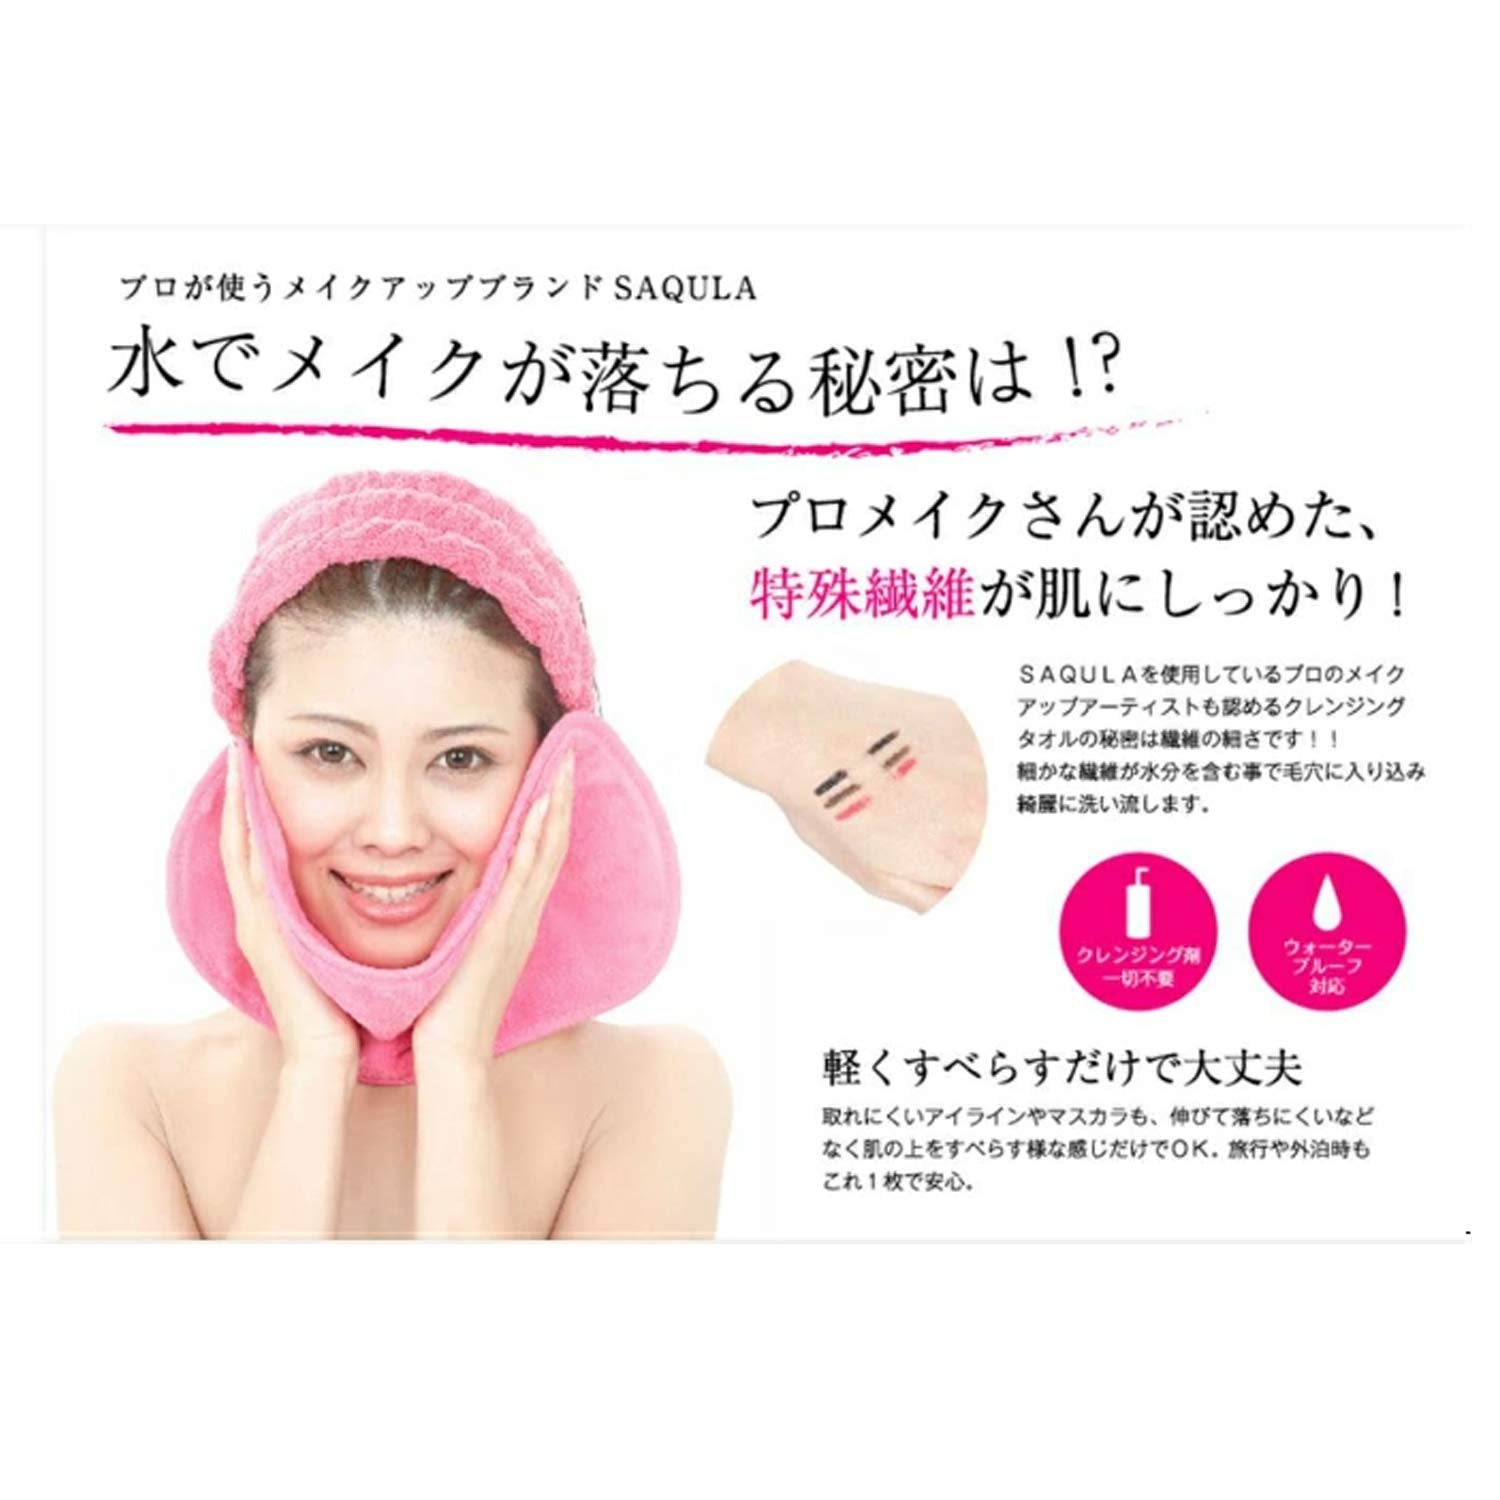 Canmake Powder Cheeks Pw25 Sugar Orange Shade 4.4G Compact - YOYO JAPAN